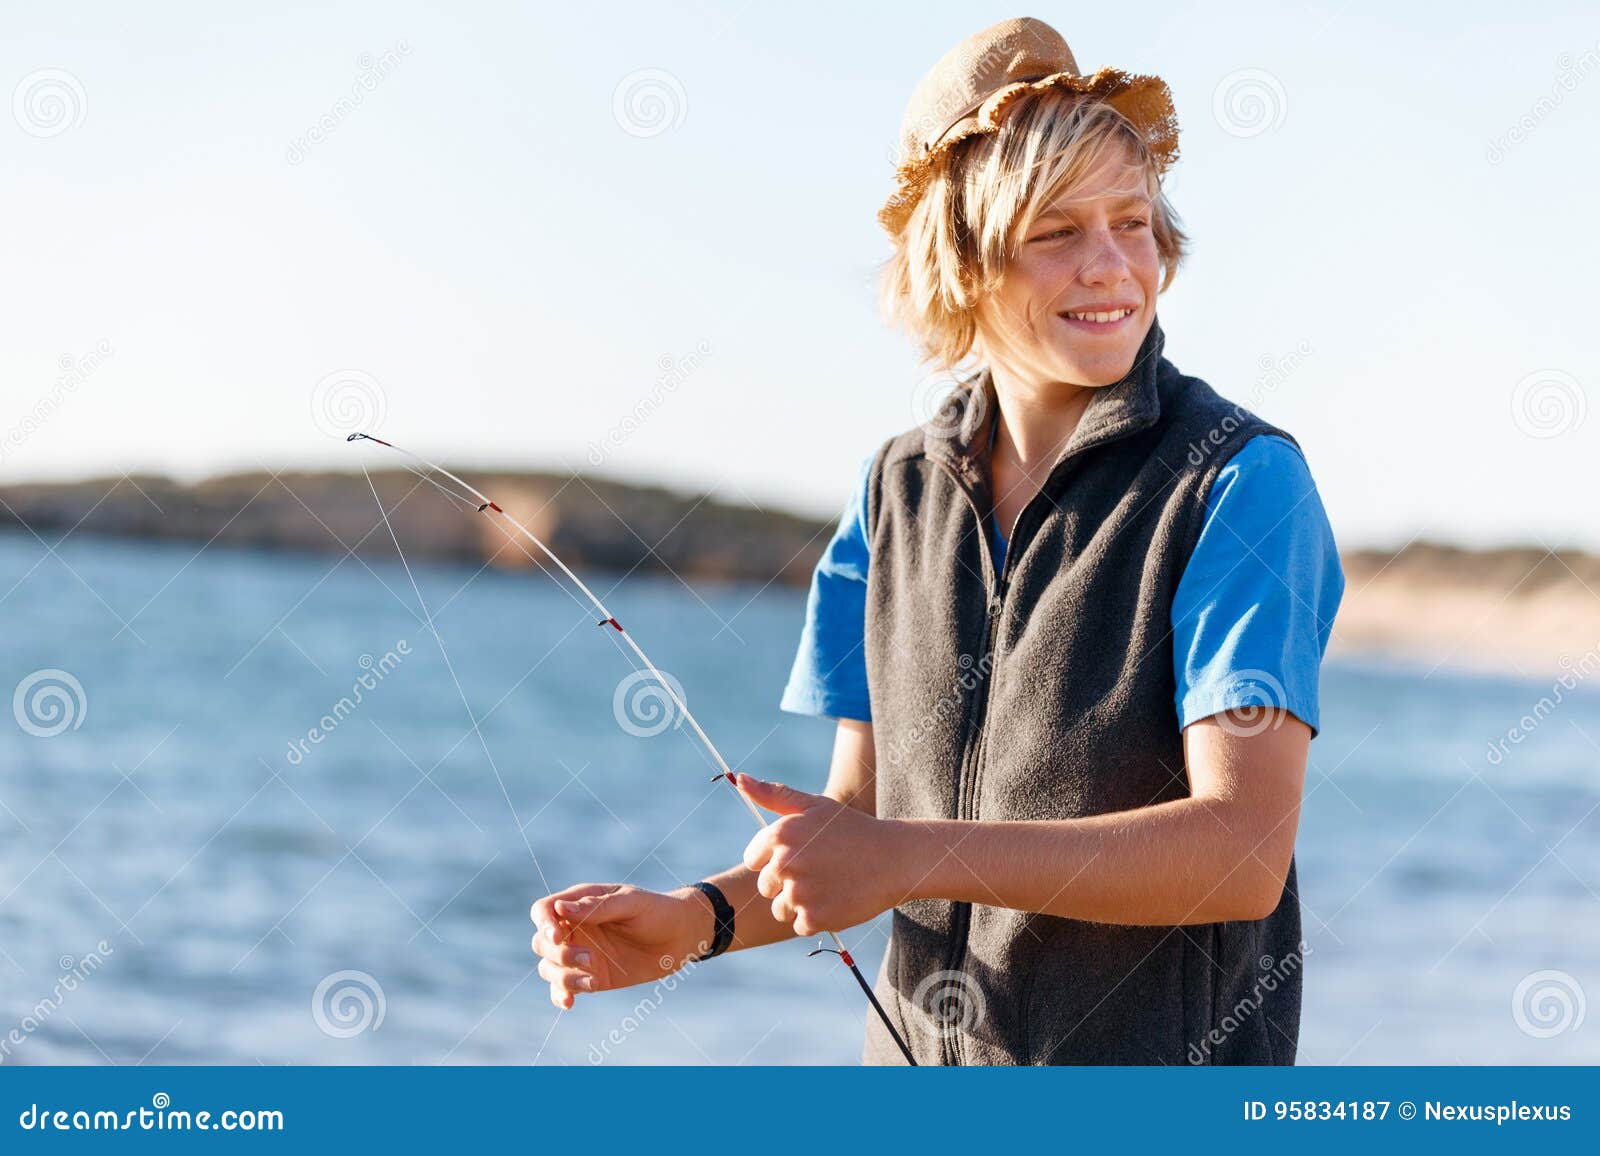 https://thumbs.dreamstime.com/z/teenage-boy-fishing-sea-rod-95834187.jpg